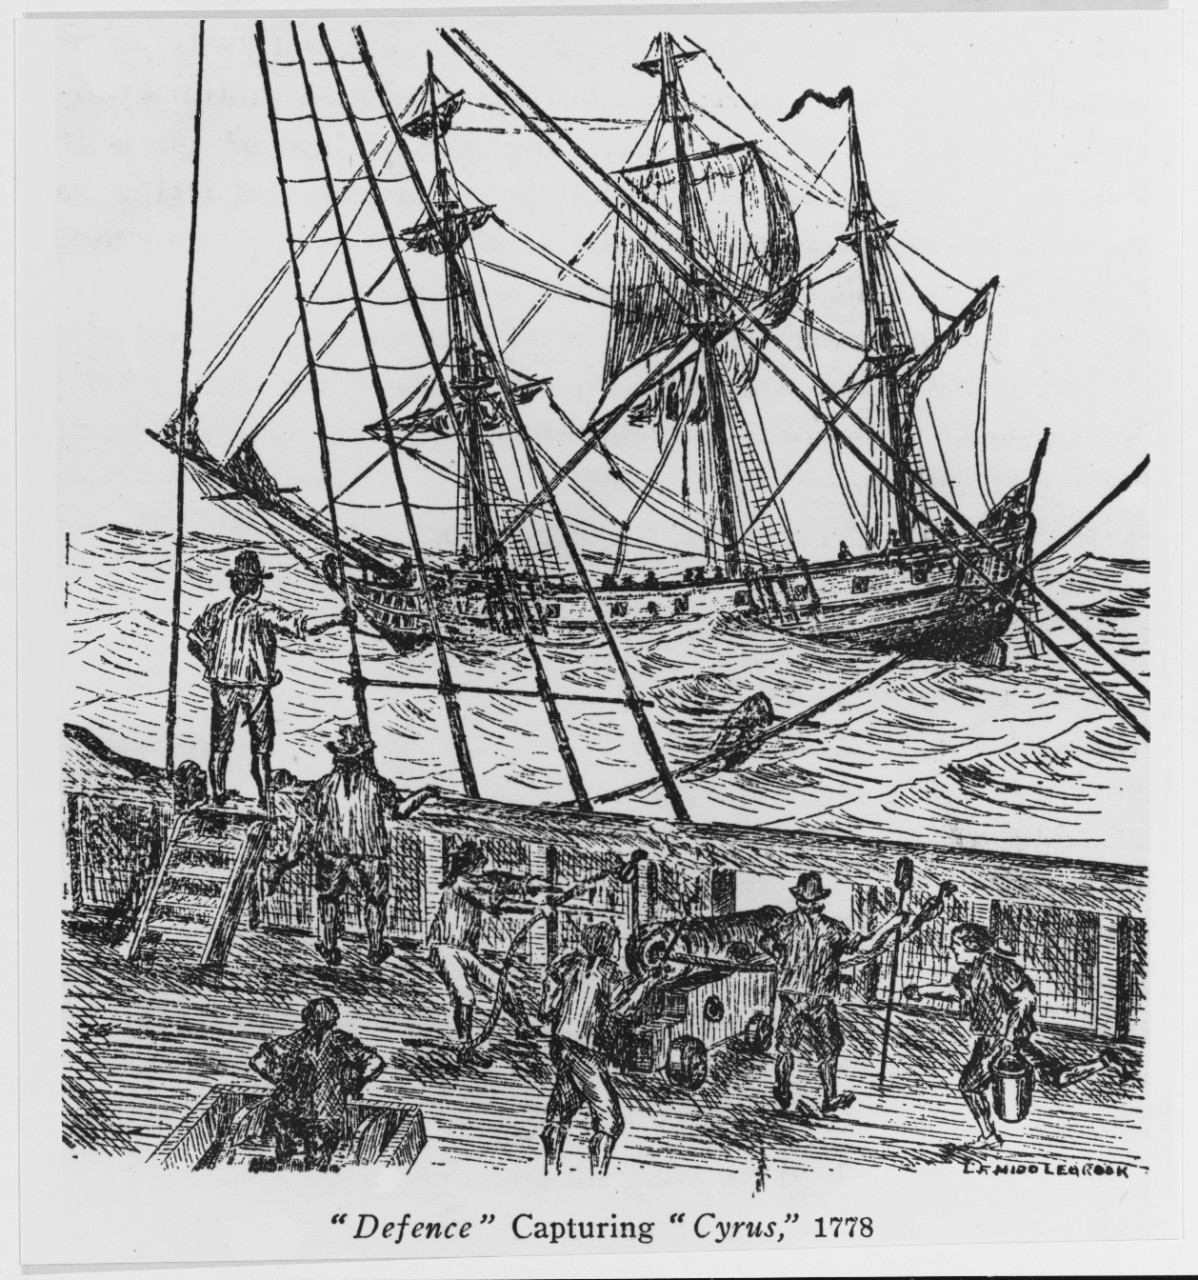 DEFENCE (Connecticut ship)